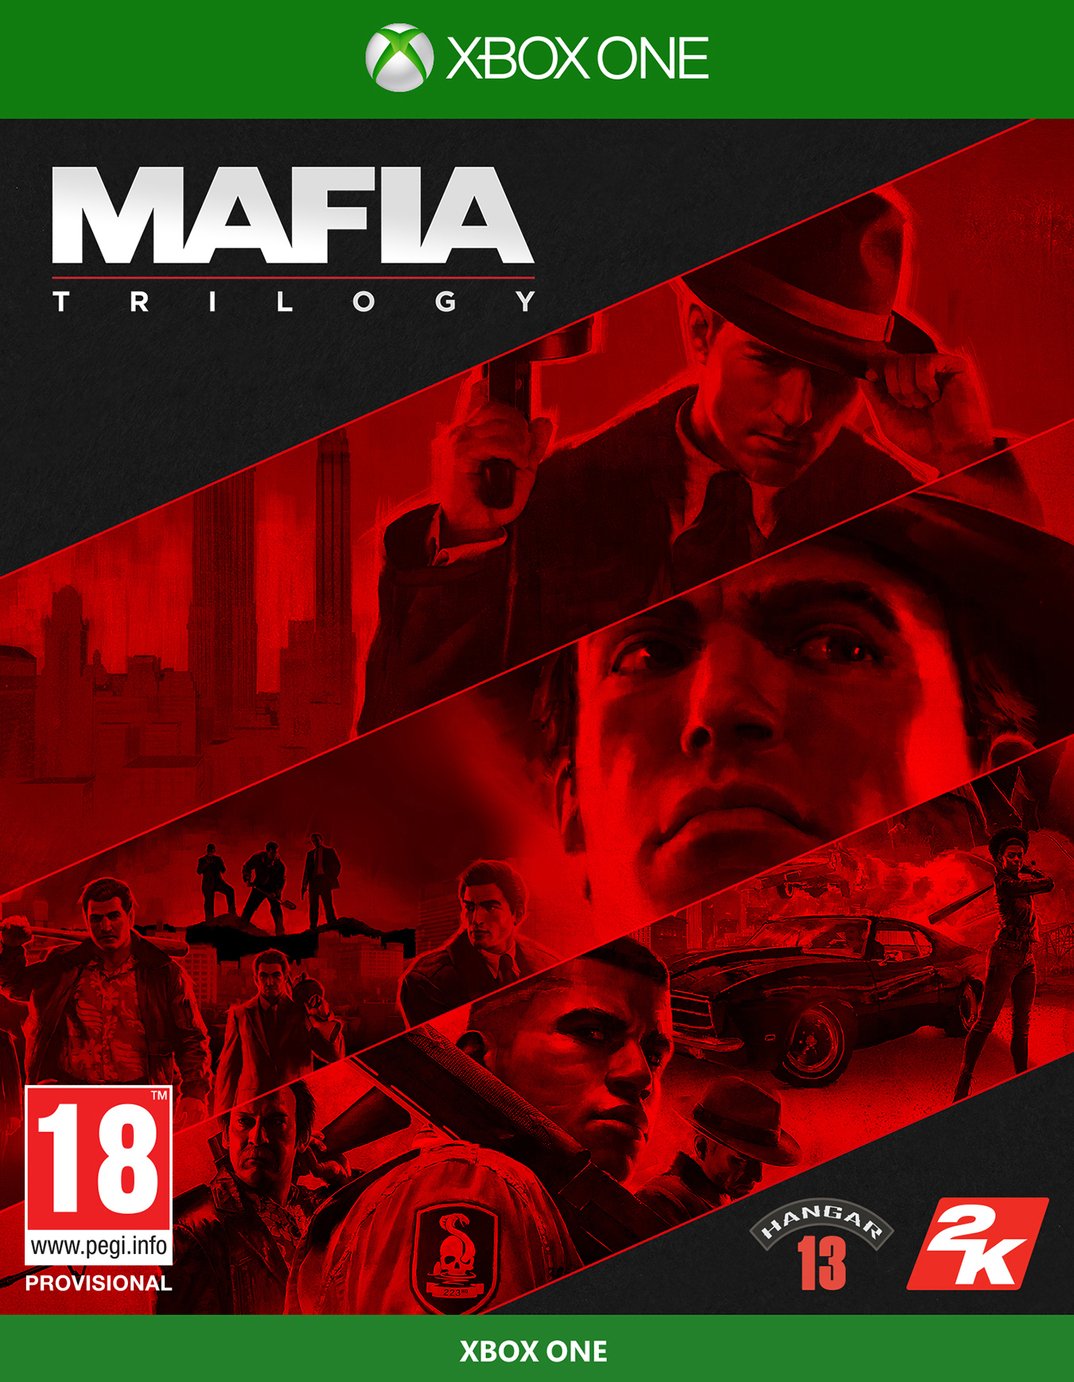 Mafia Trilogy Xbox One Game Pre-Order Review